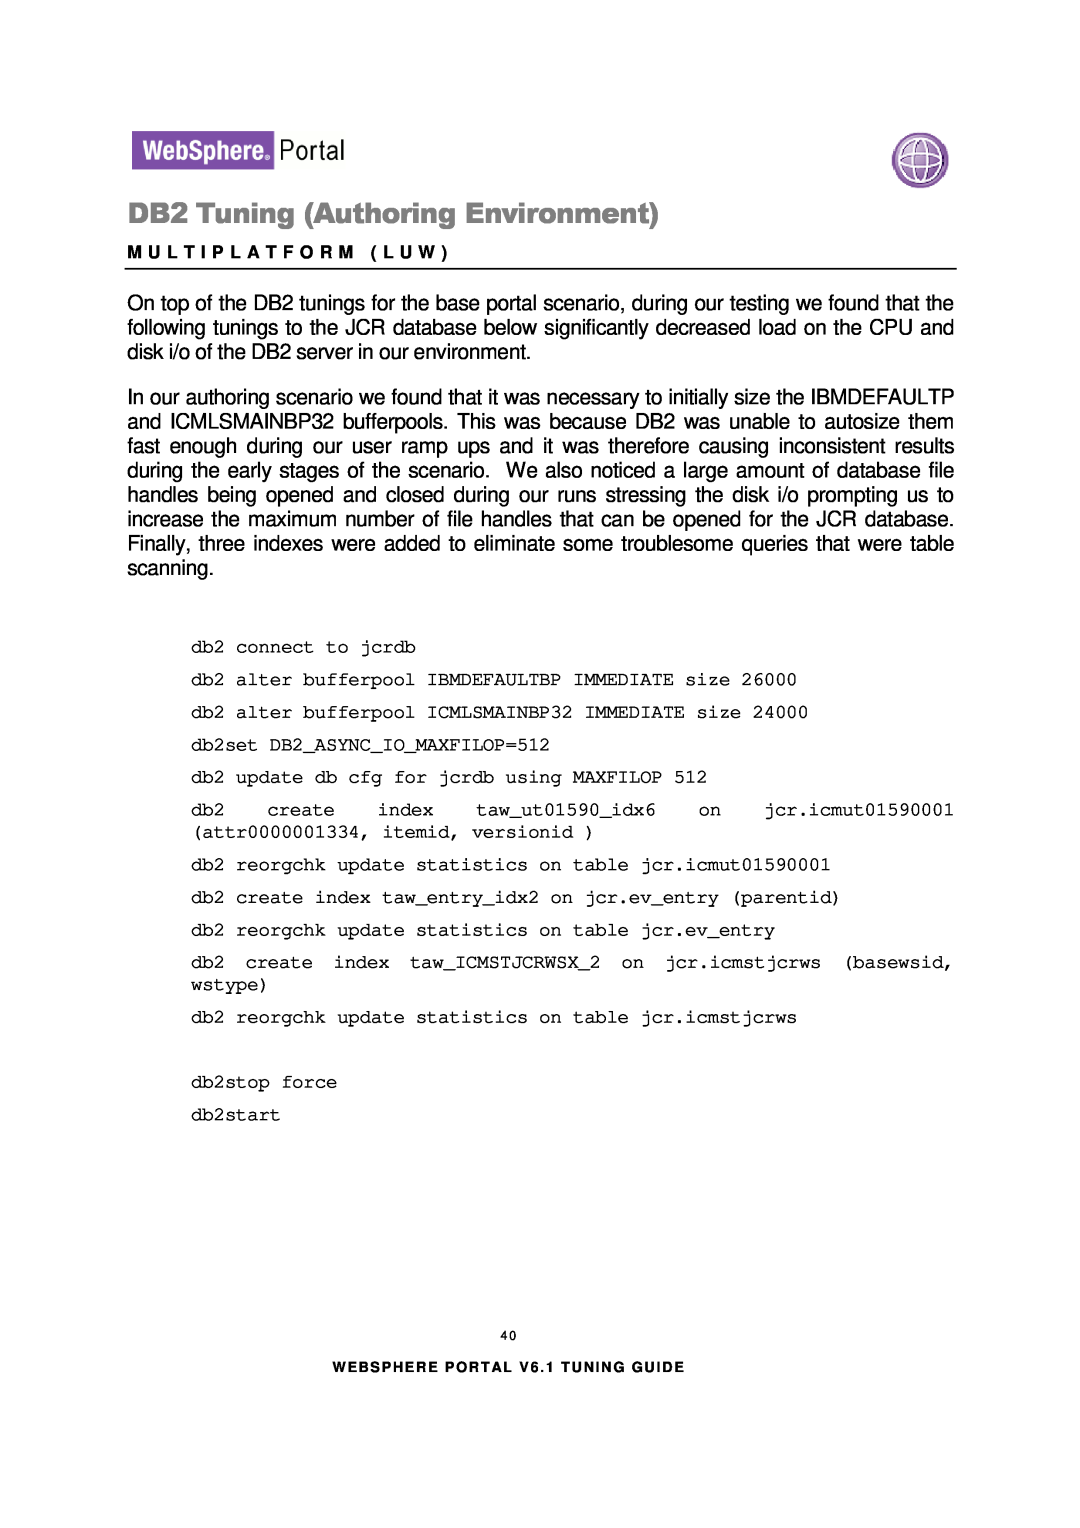 IBM 6.1.X manual DB2 Tuning Authoring Environment 